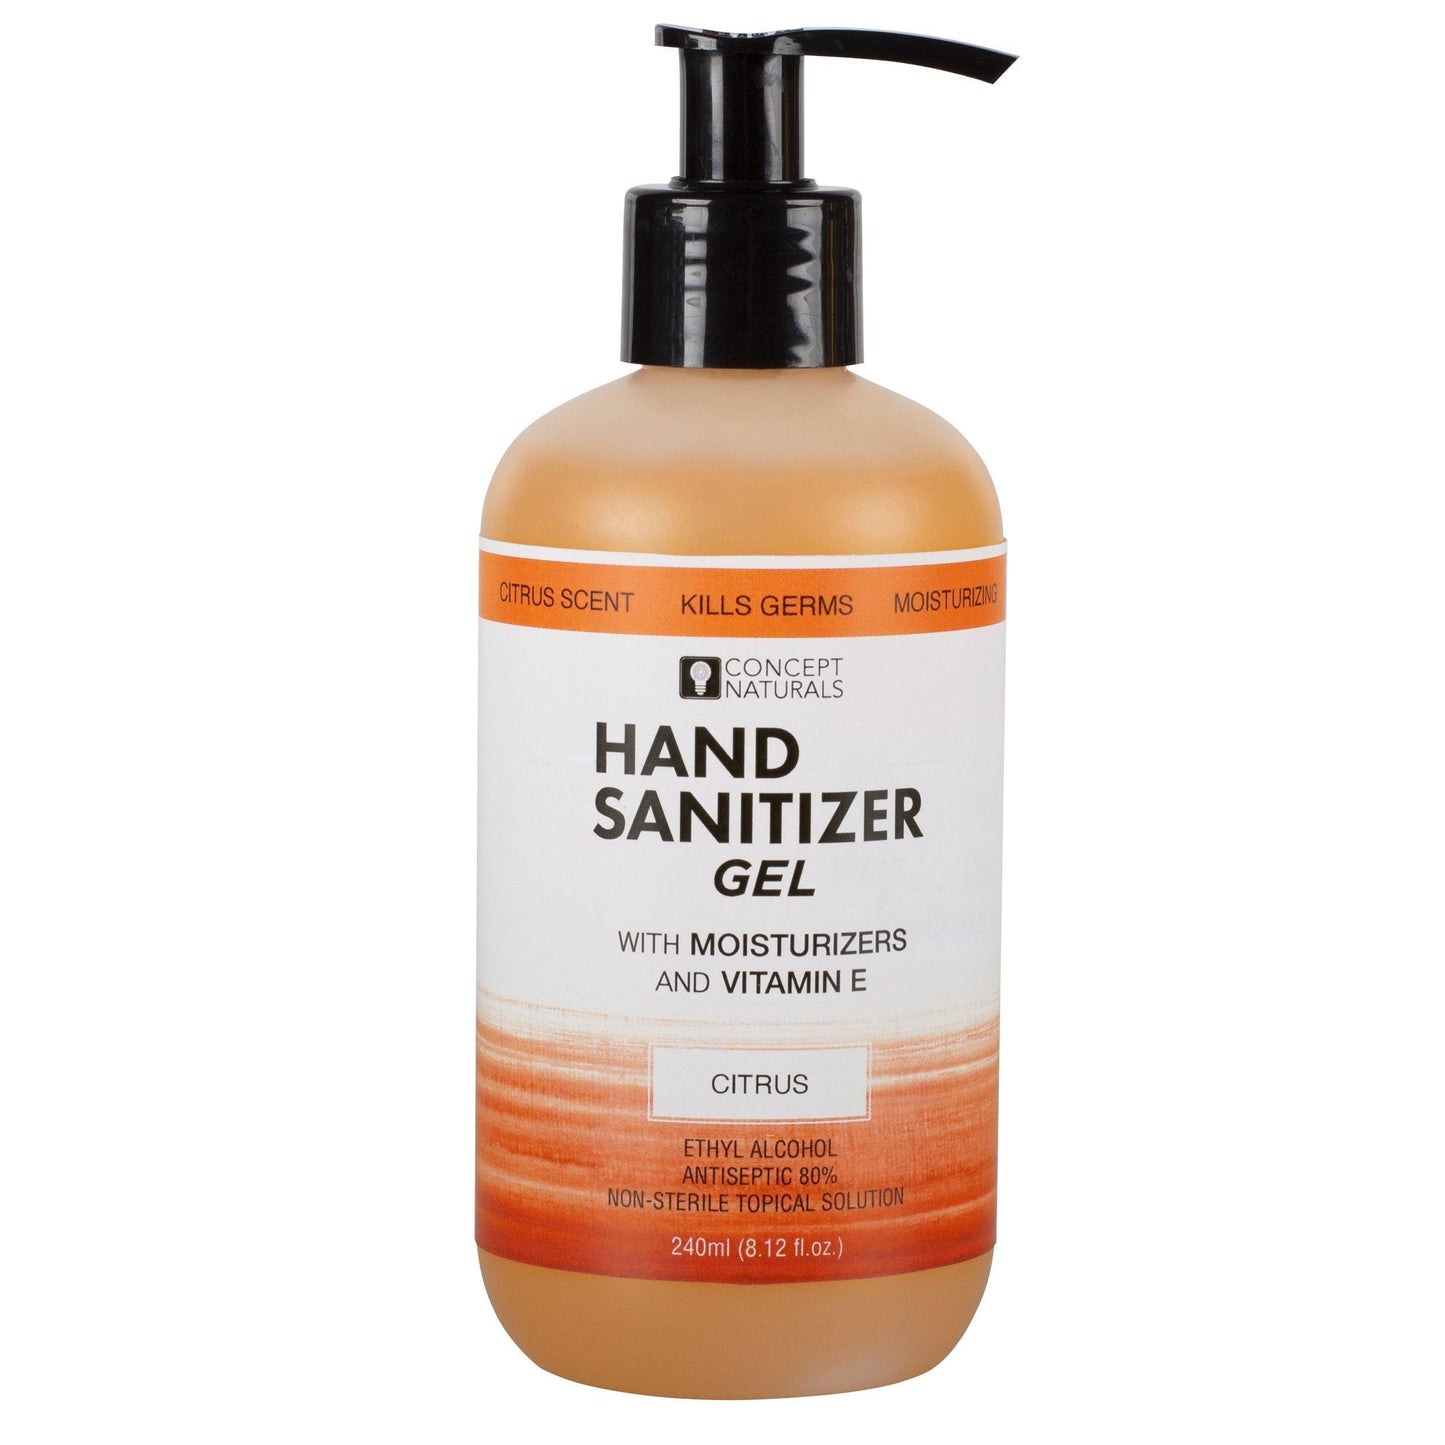 Concept Naturals Hand Sanitizer Gel - Citrus - 8.12 Fl. Oz. - My Sex Toy Hub